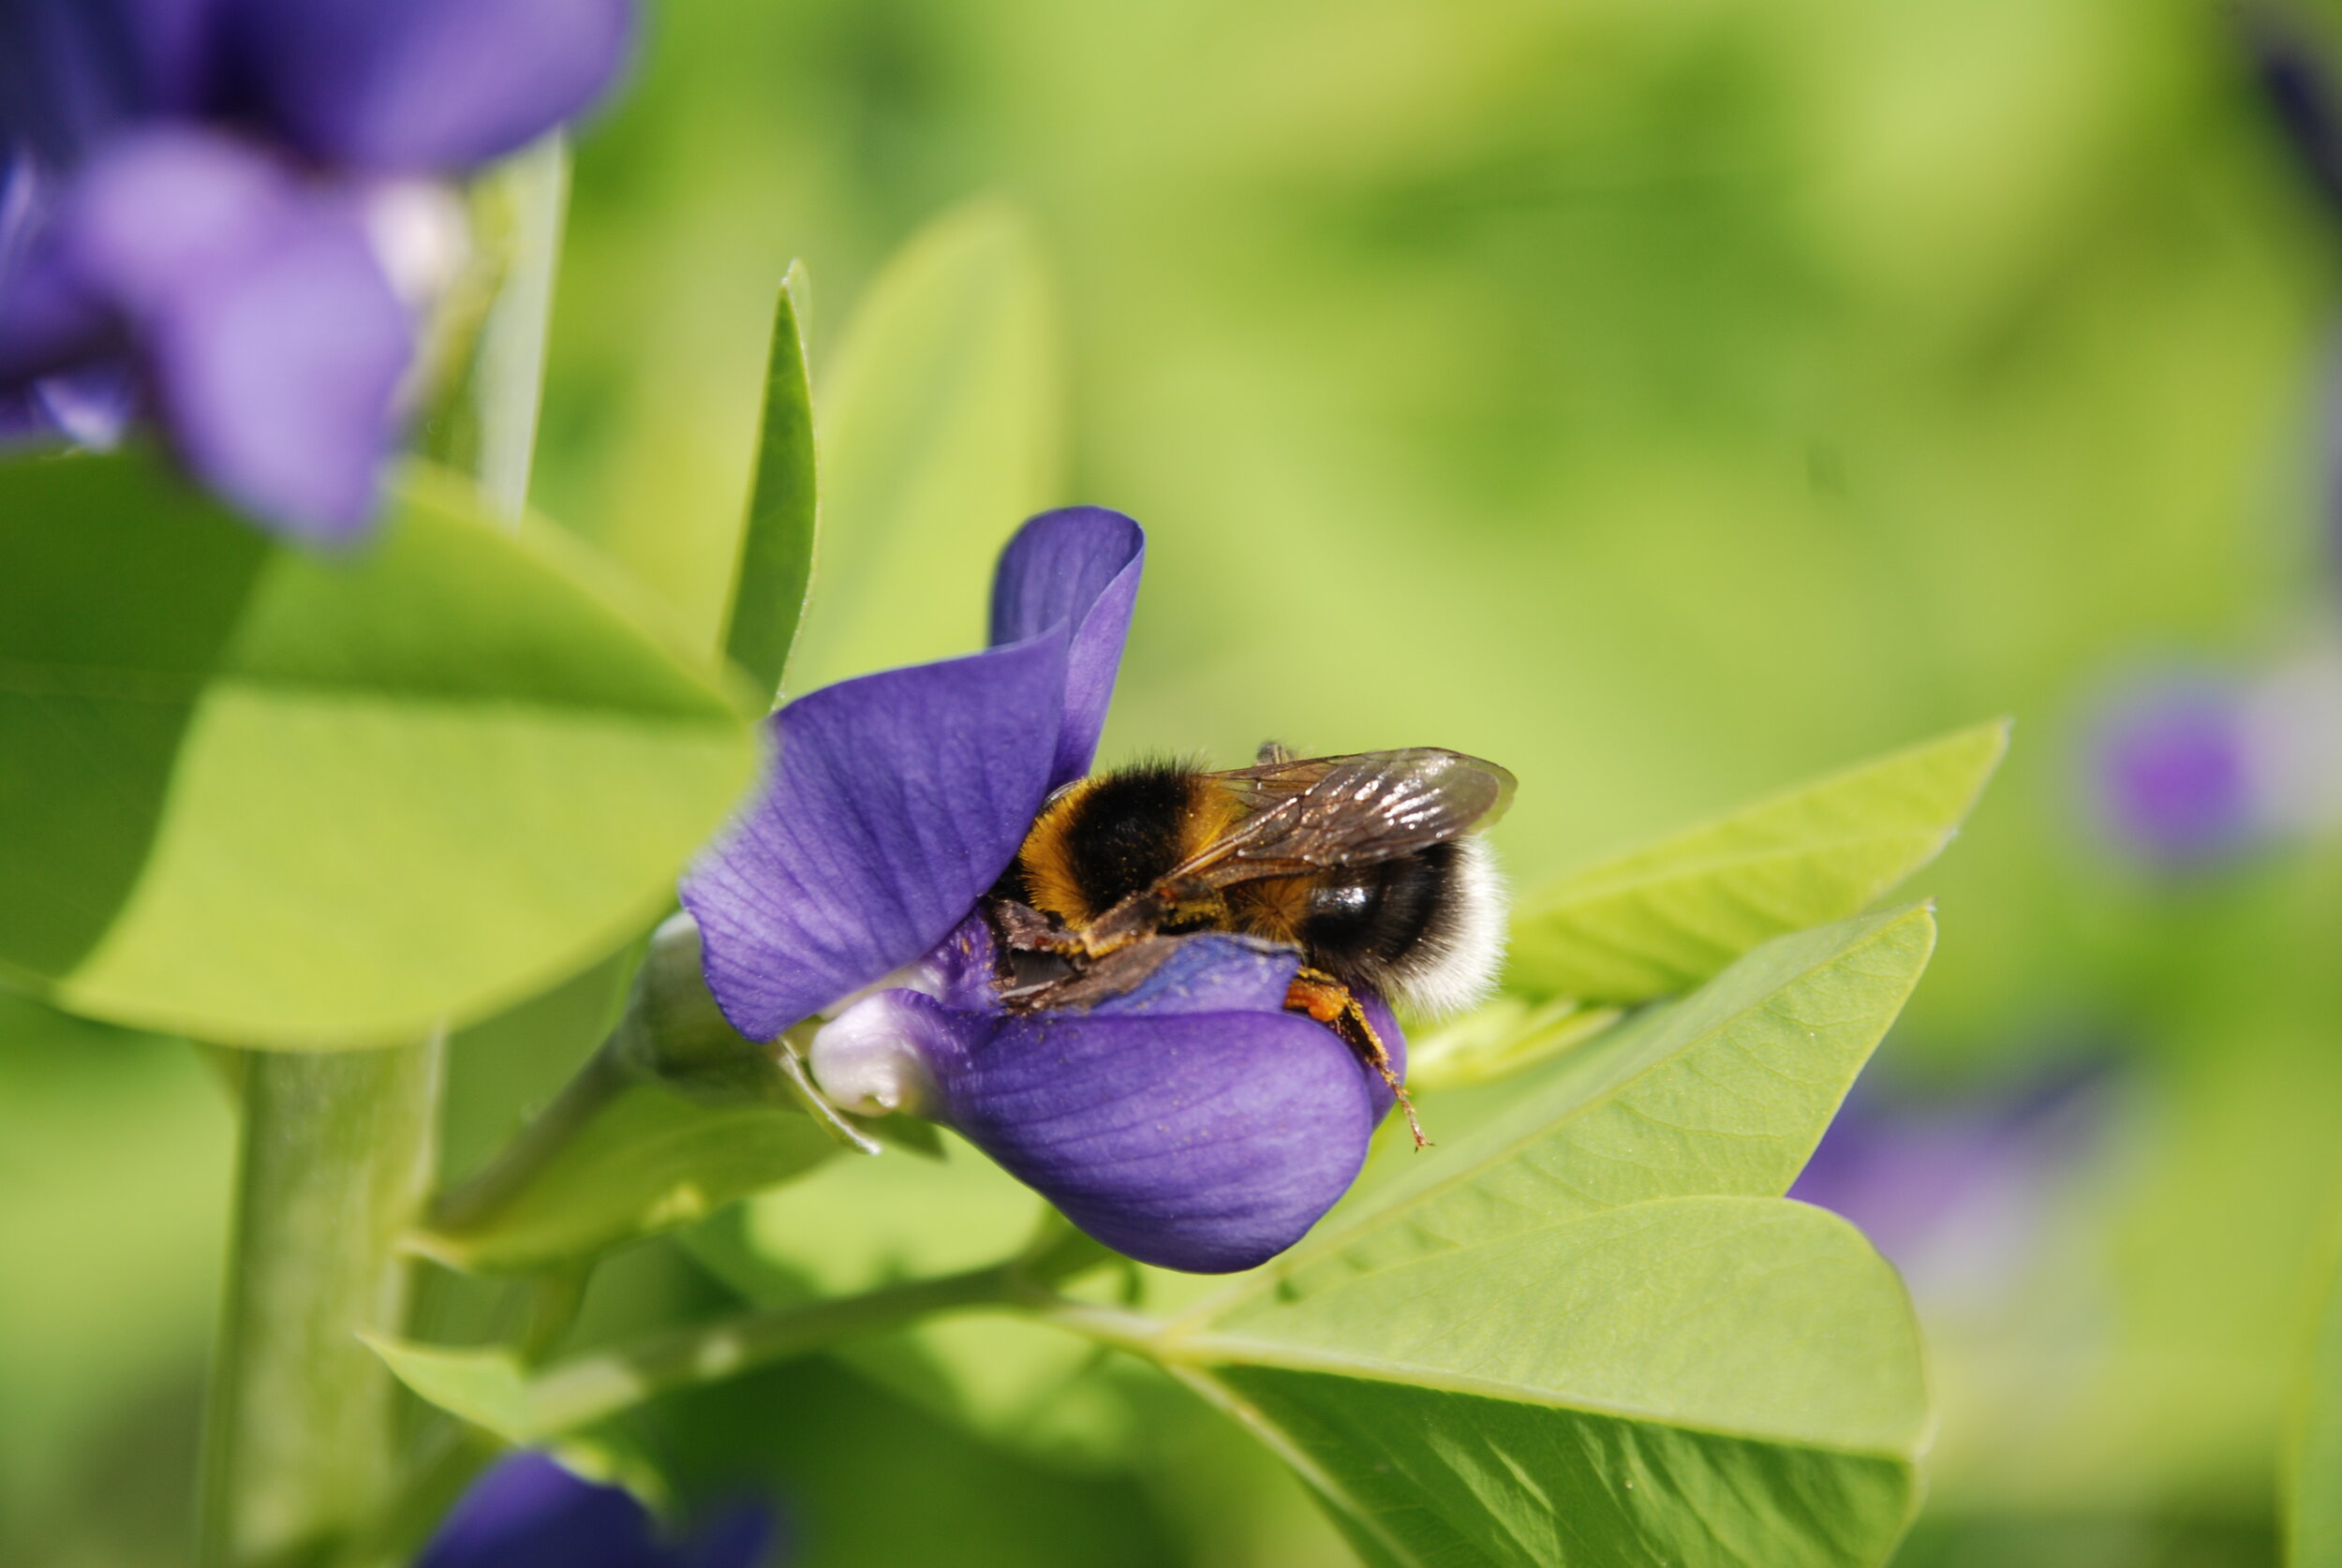   tuinhommel  / garden bumble bee /  Bombus hortorum  